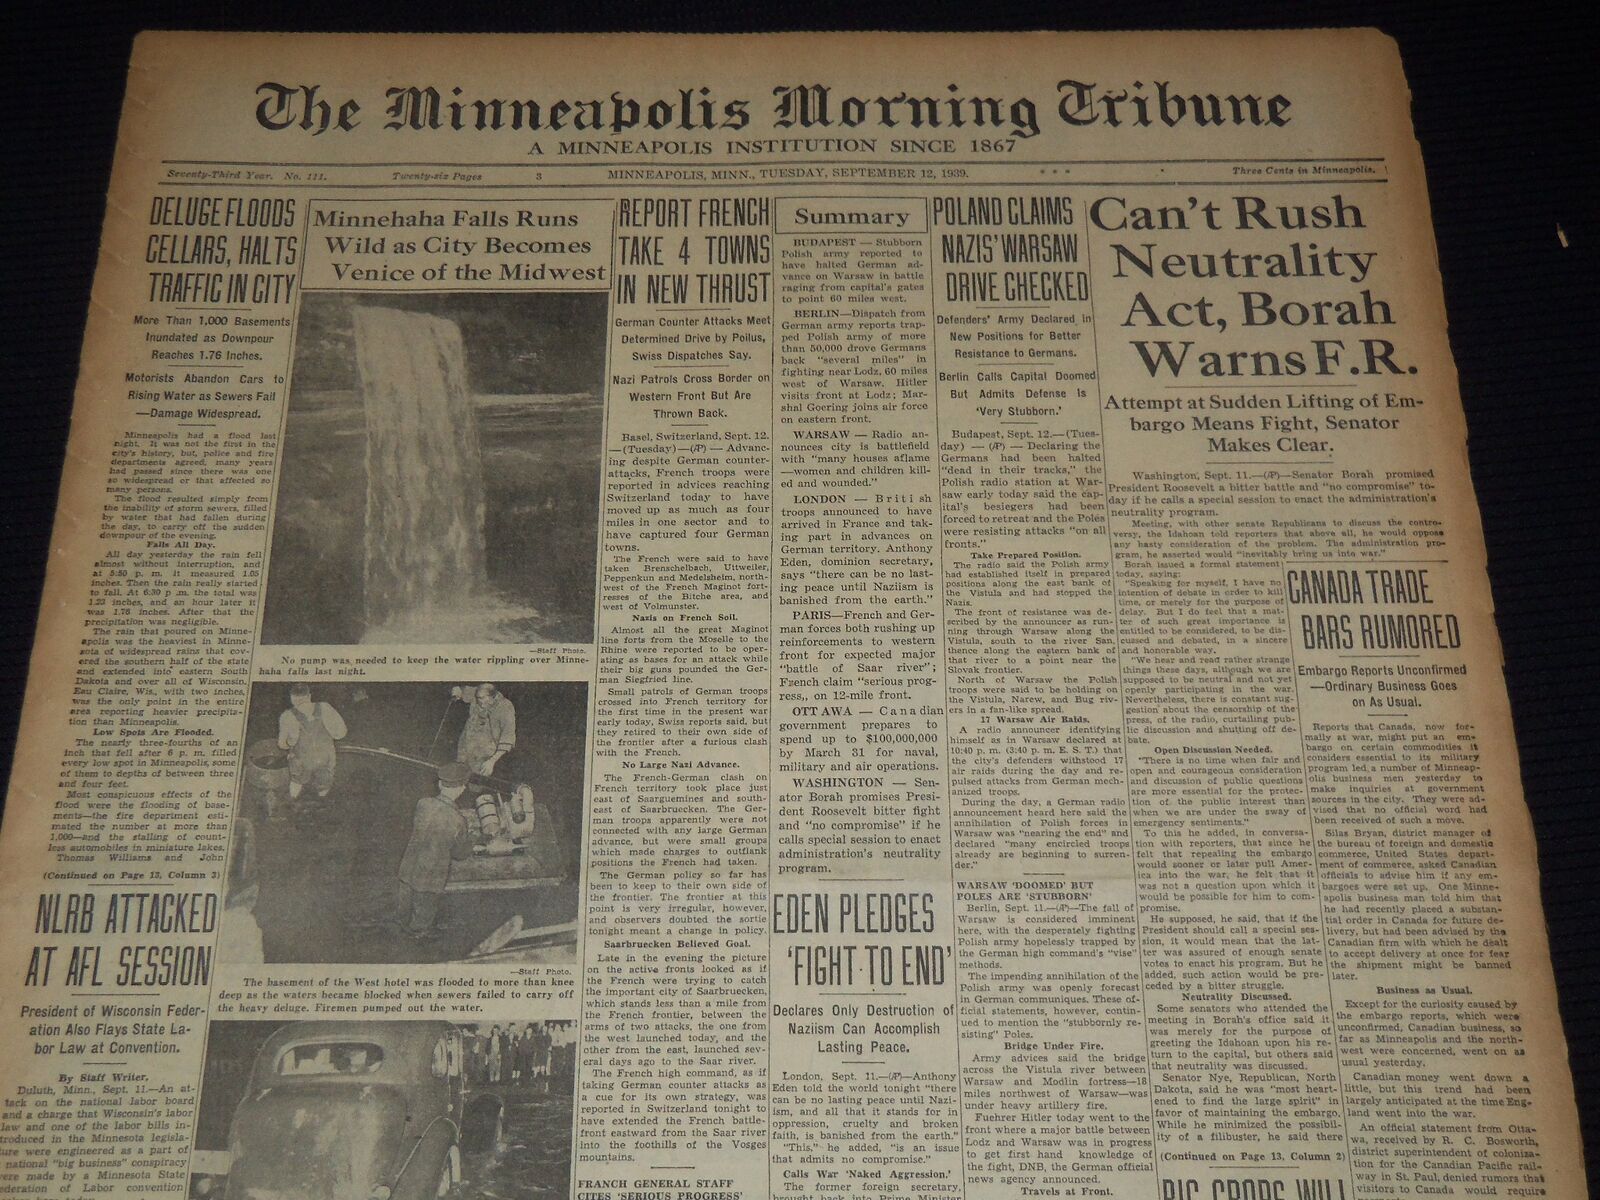 1939 SEPT 12 MINNEAPOLIS MORNING TRIBUNE NEWSPAPER - NEUTRALITY ACT - NT 9528